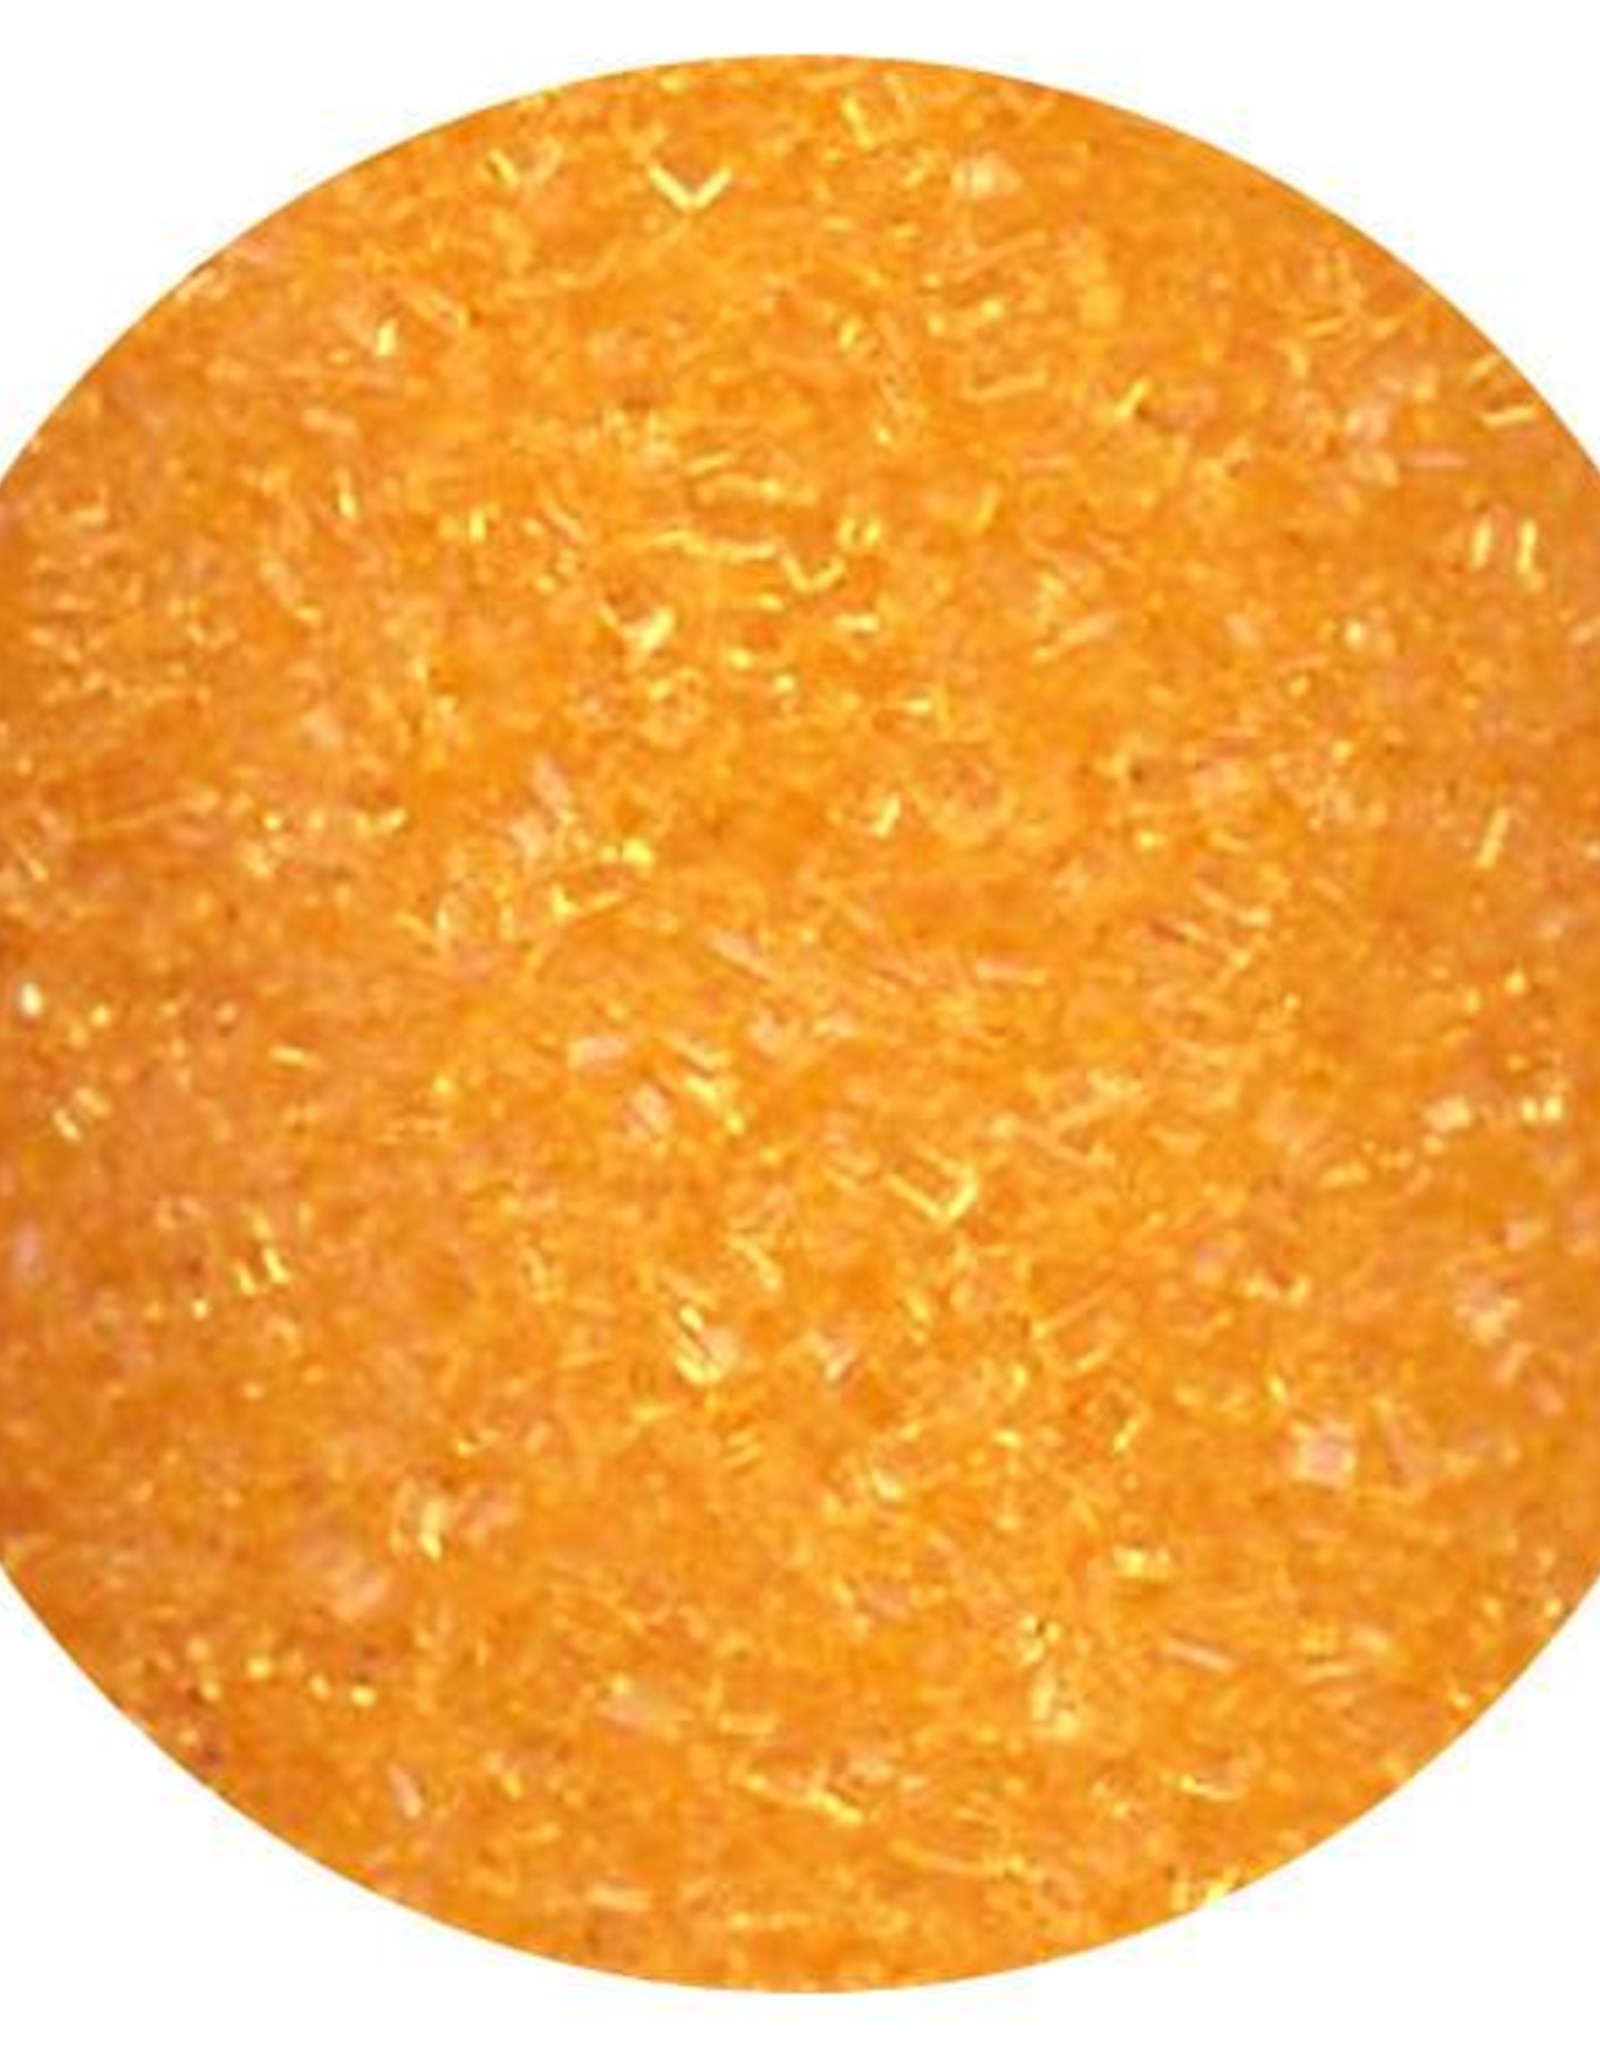 CK Products Yellow (Sun) Sanding Sugar